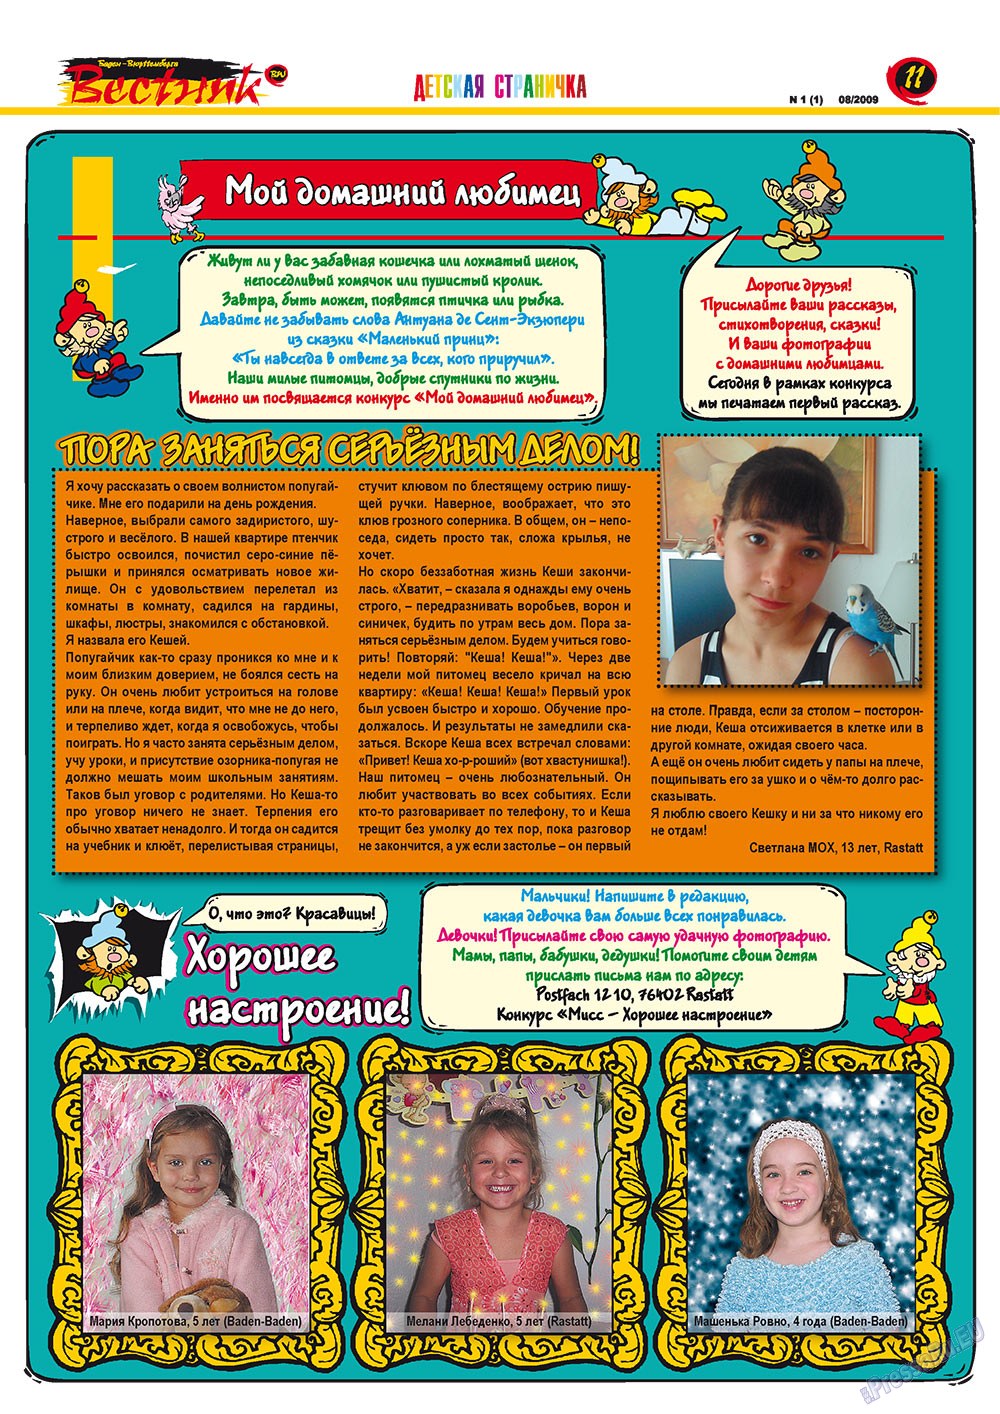 Вестник-info (журнал). 2009 год, номер 1, стр. 11